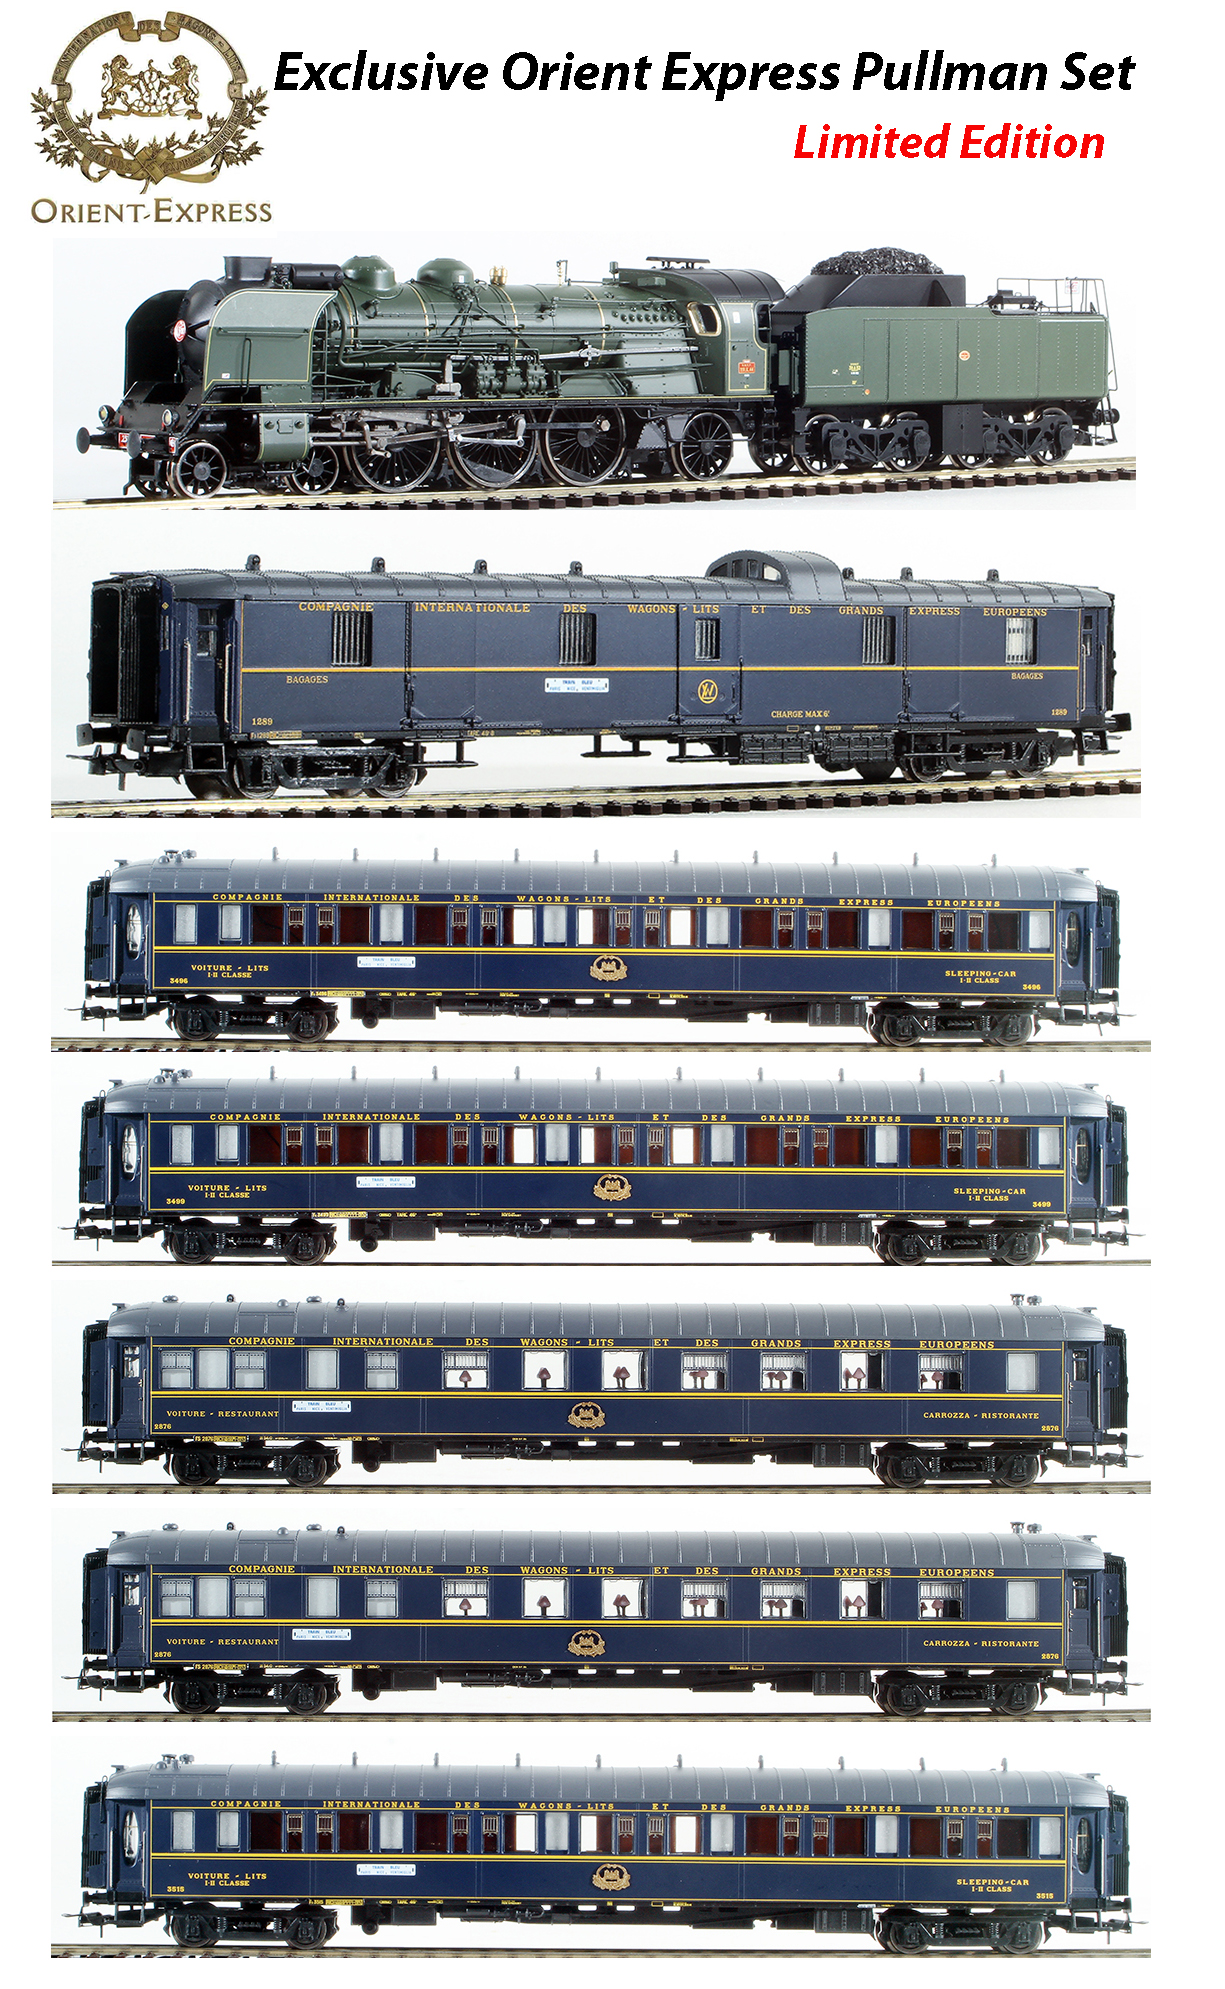 REE Modeles MB-131S1 - 1930s Pullman Orient Express Set